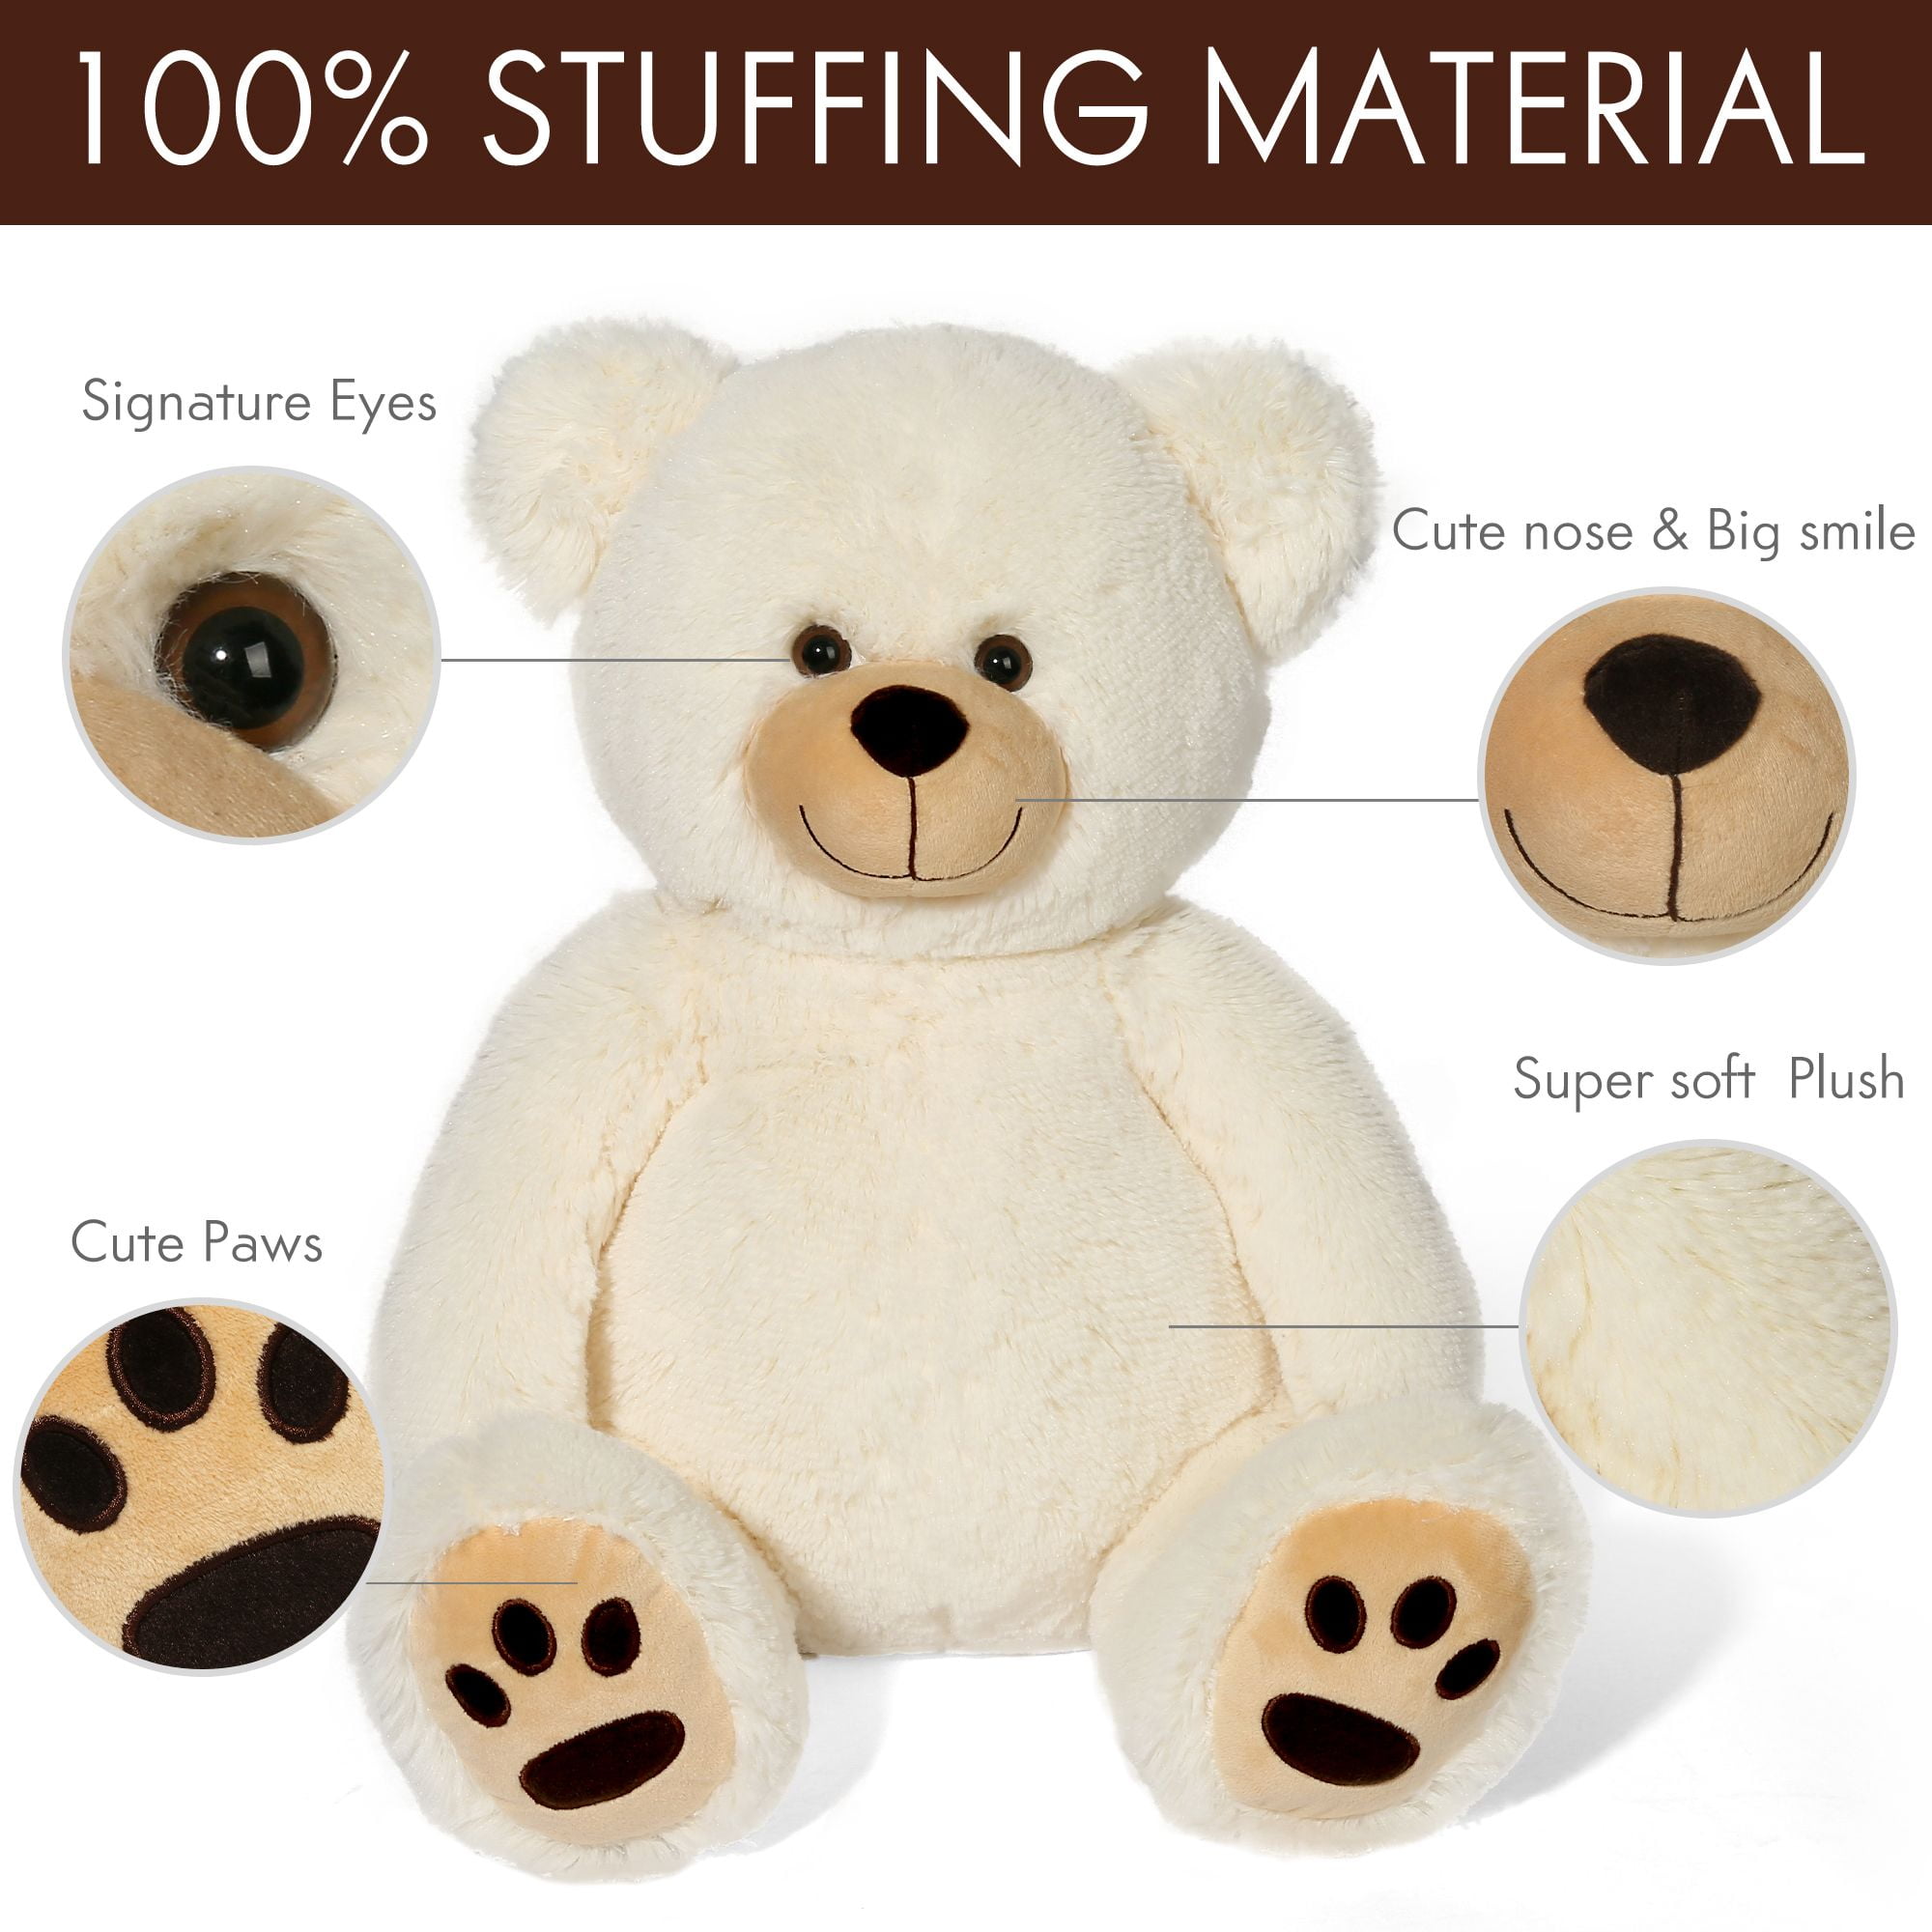 Lotfancy Teddy Bear Stuffed Animals 20